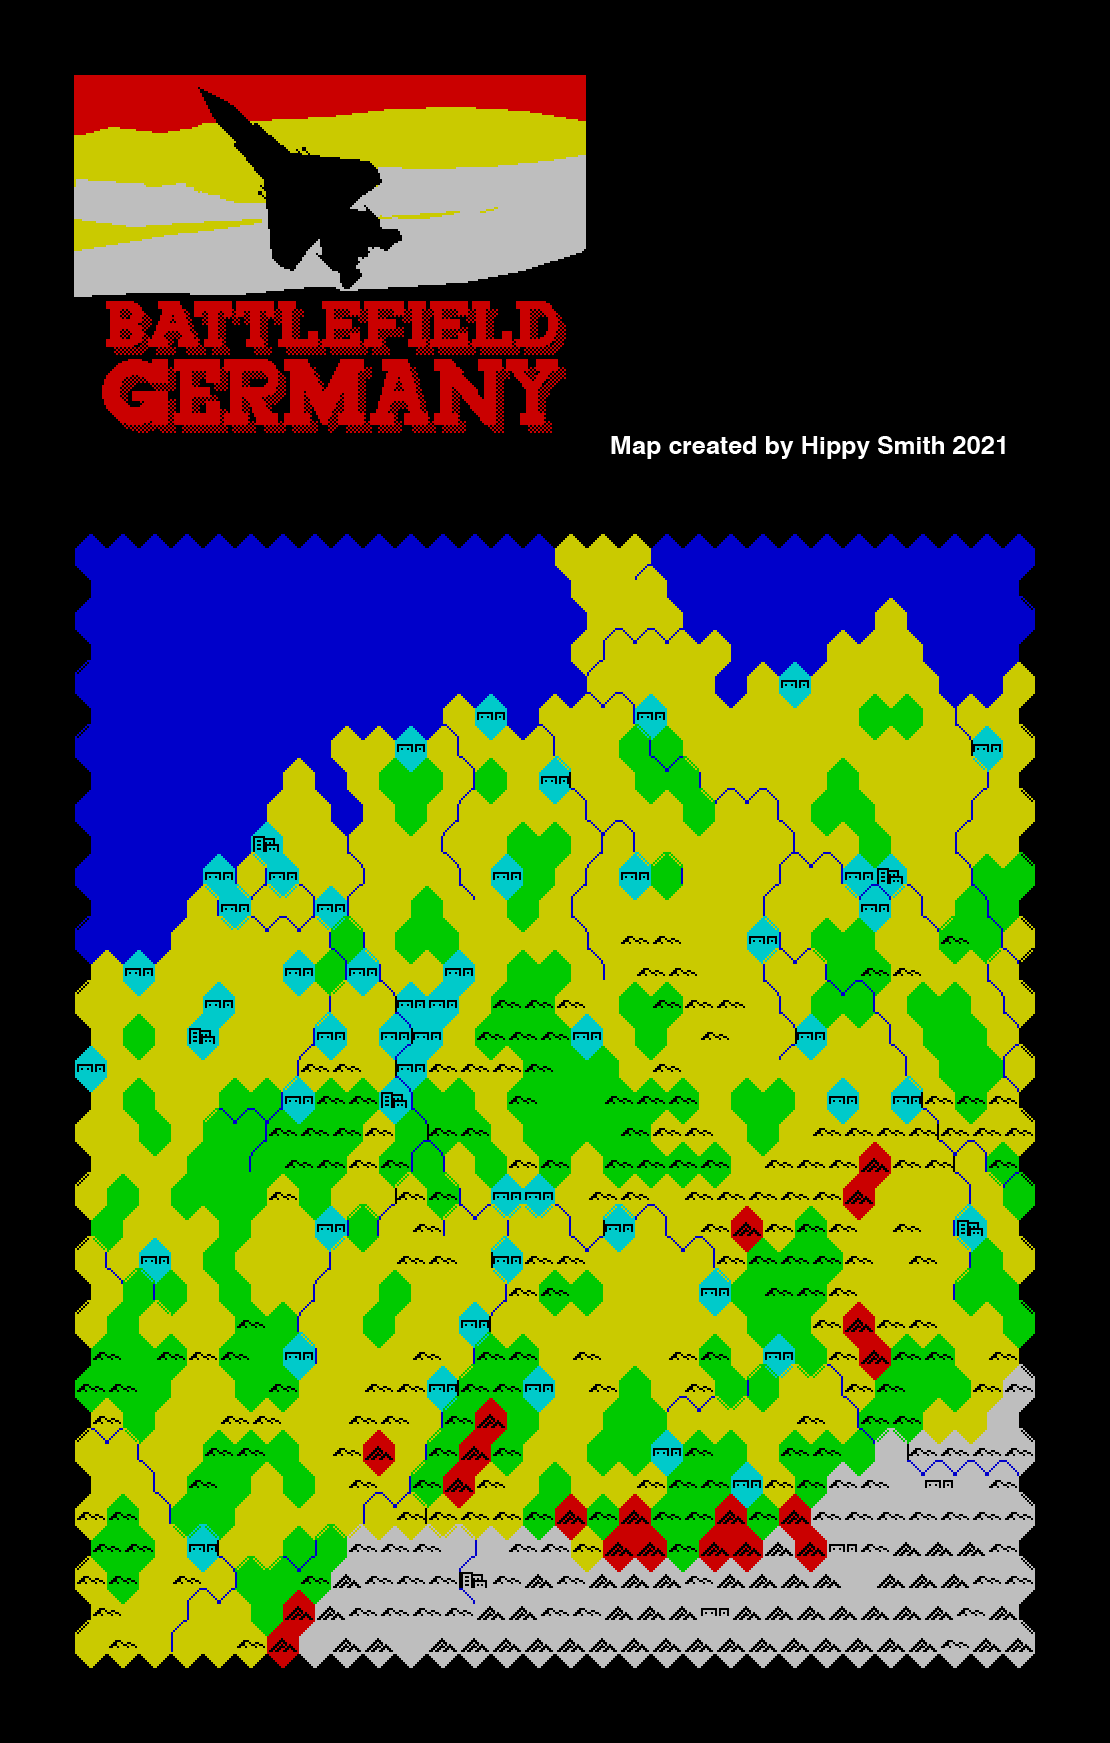 Battlefield Germany - The Map